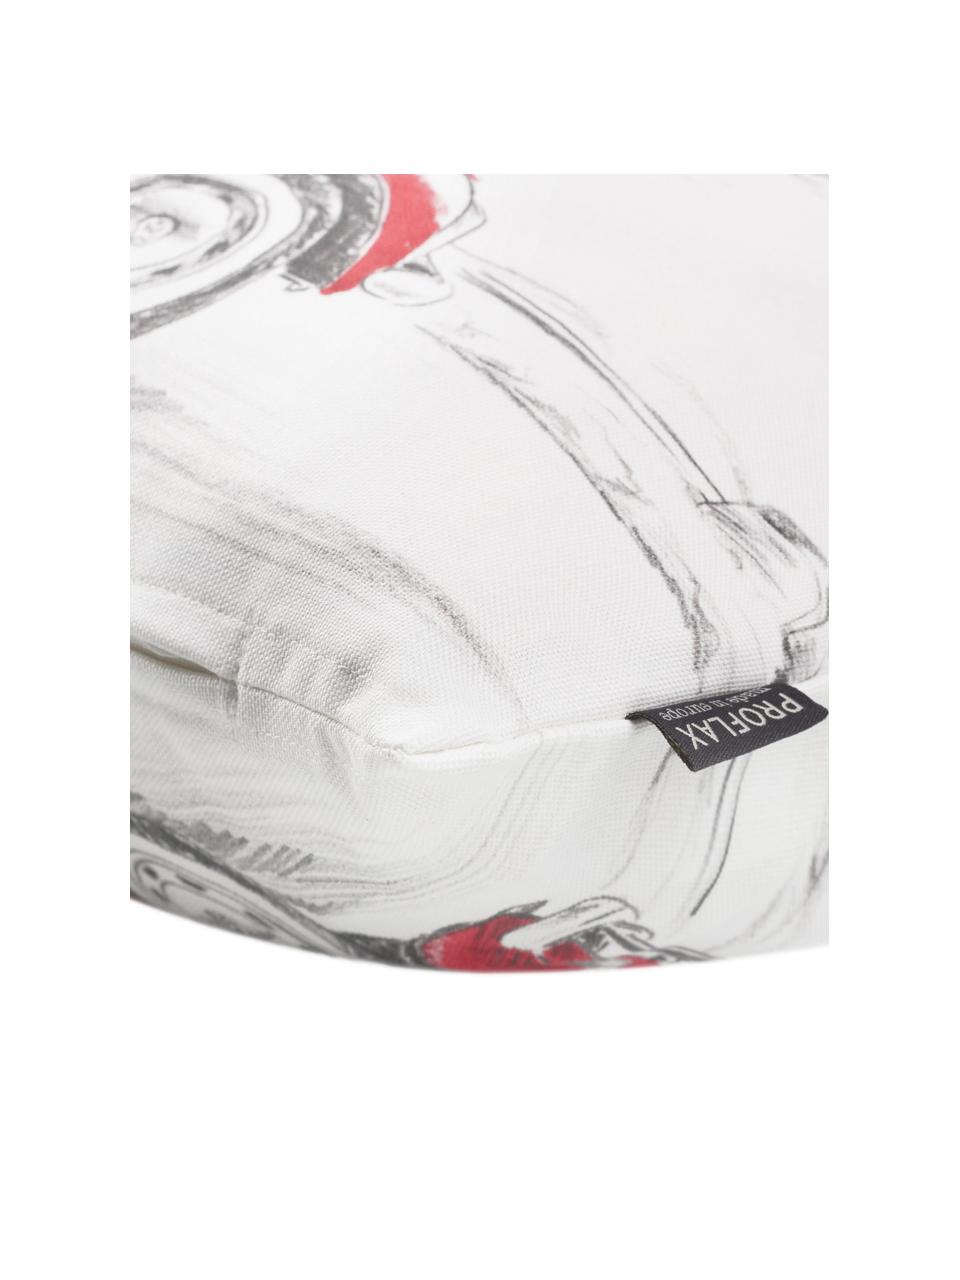 Kissenhülle Dodo mit Auto-Motiv in Weiss/Rot, 100% Baumwolle, Weiss, Rot, Grau, 30 x 50 cm